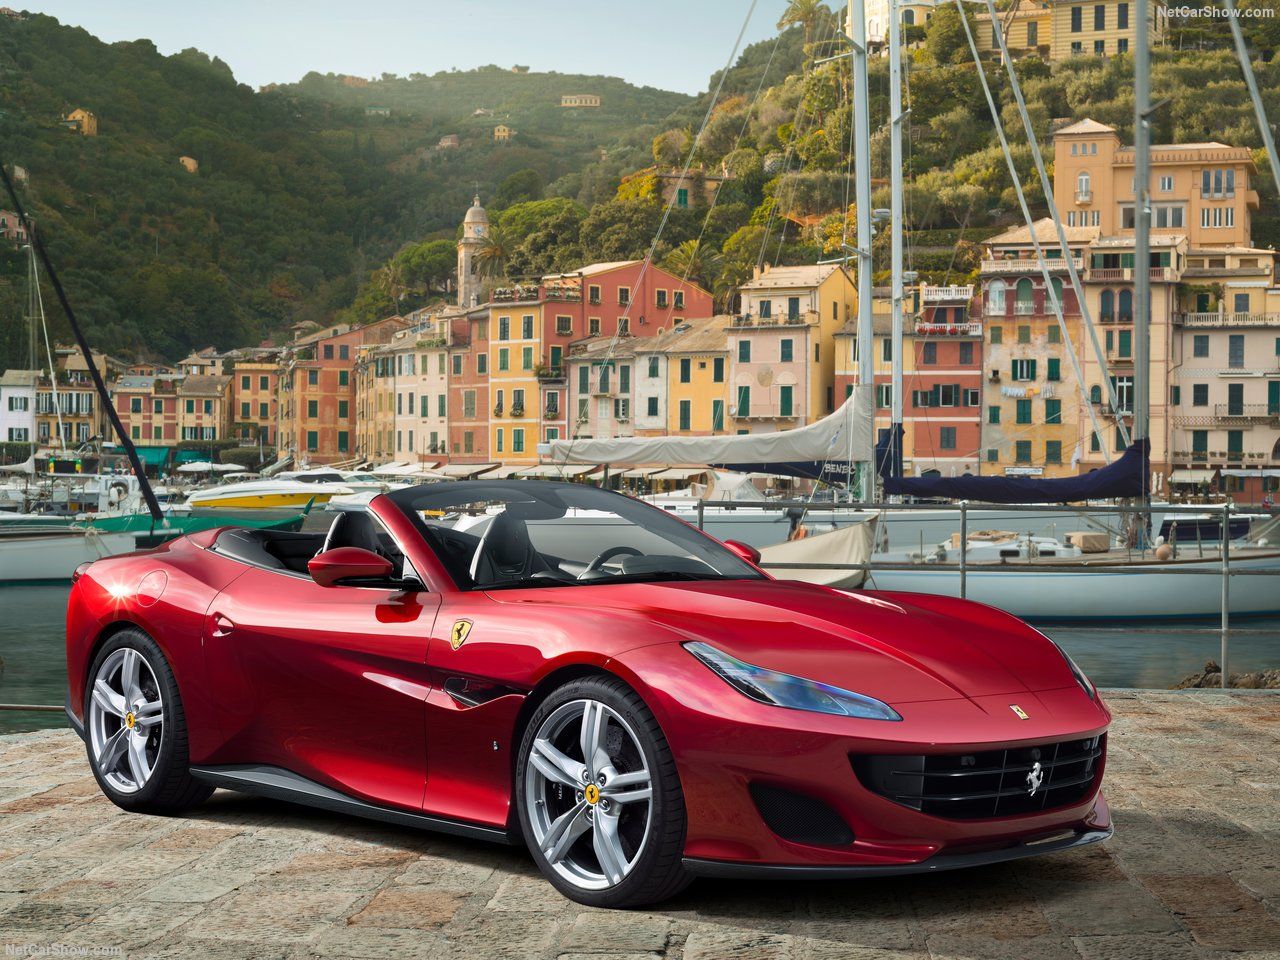 Ferrari parked at the Portofino seaside town